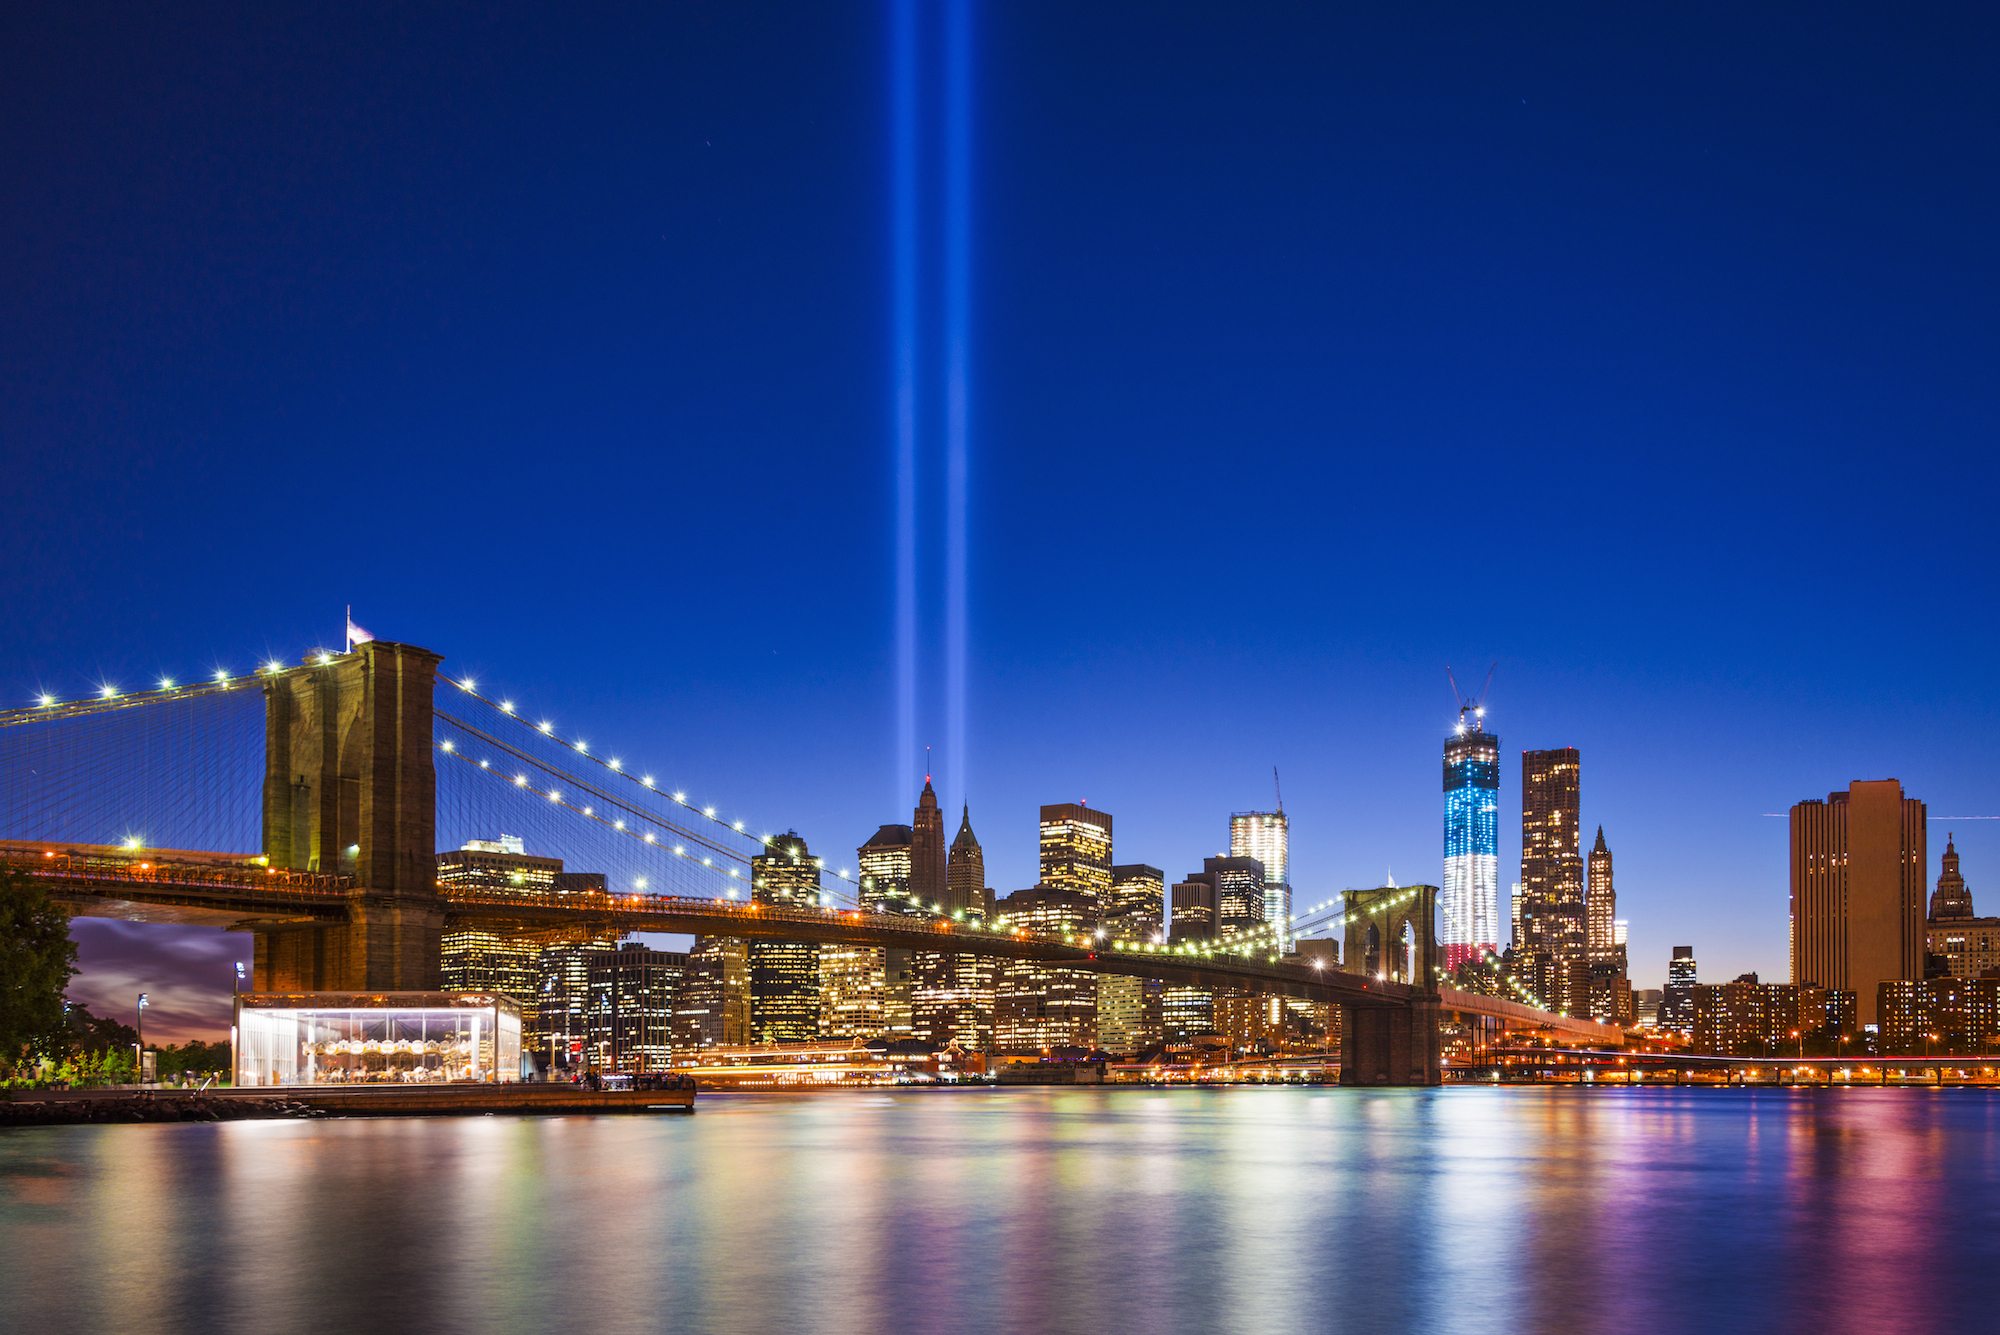 September 11 Memorials